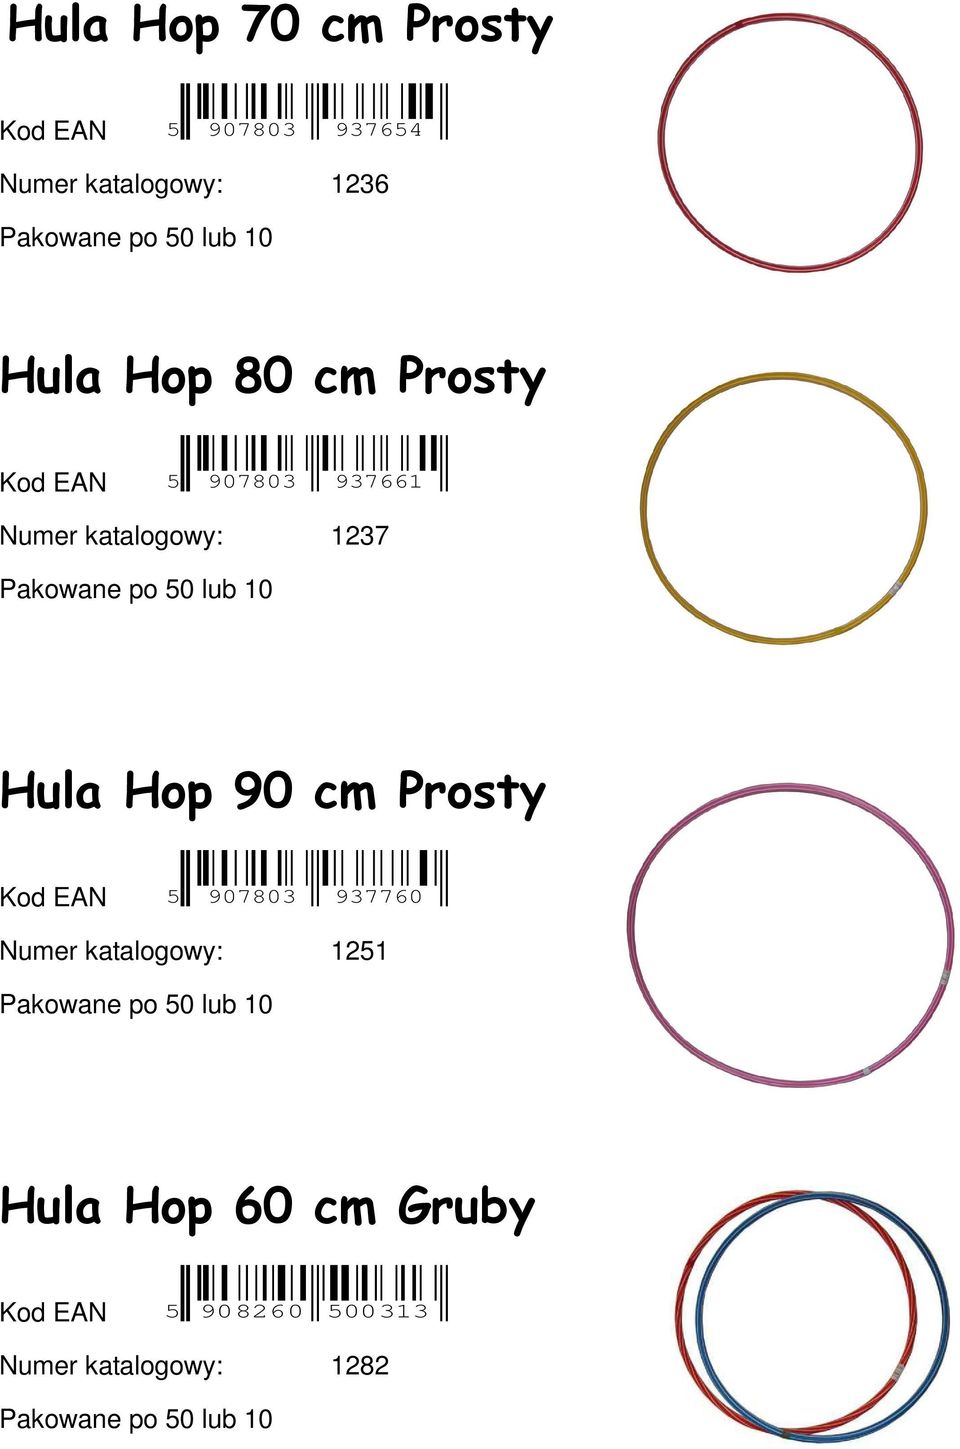 Hula Hop 90 cm Prosty Kod EAN 5 907803 937760 Numer katalogowy: 1251 Pakowane po 50 lub 10